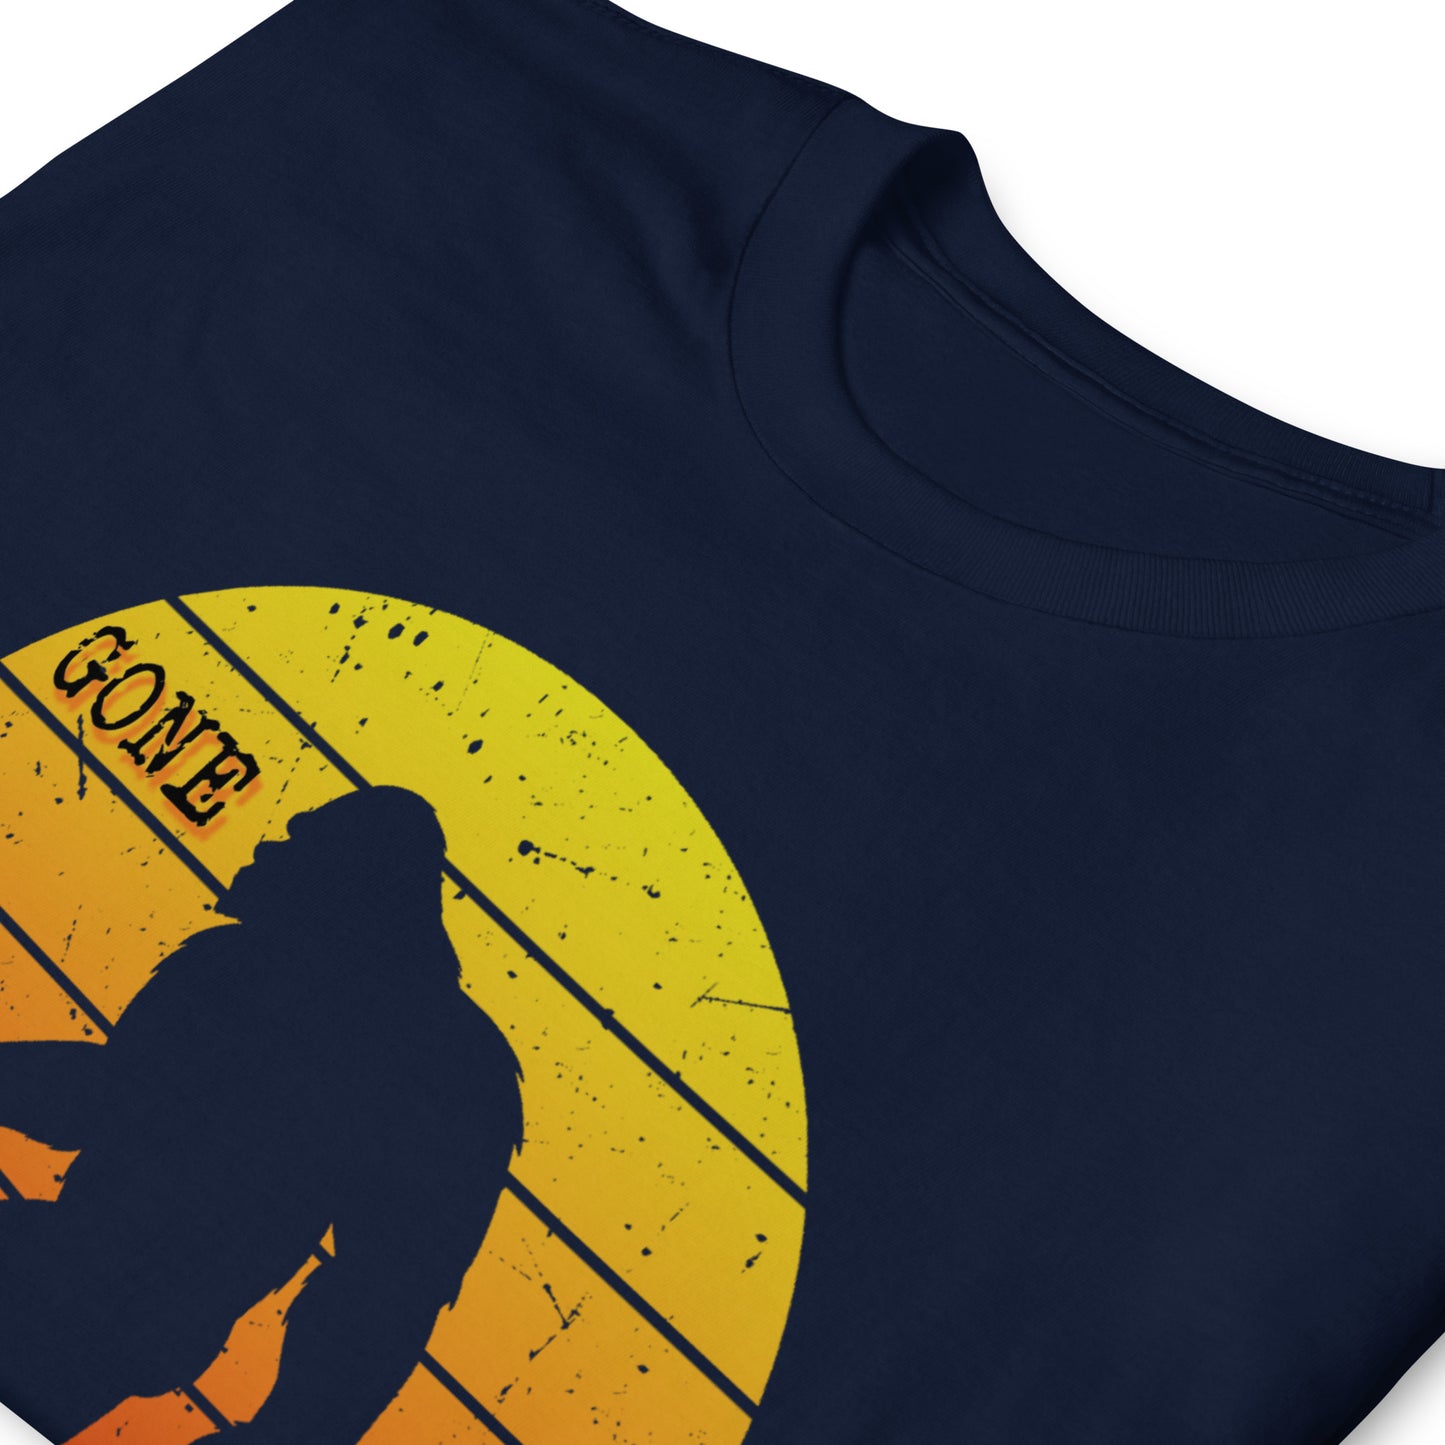 Bigfoot Gone Squatchin Unisex T-Shirt